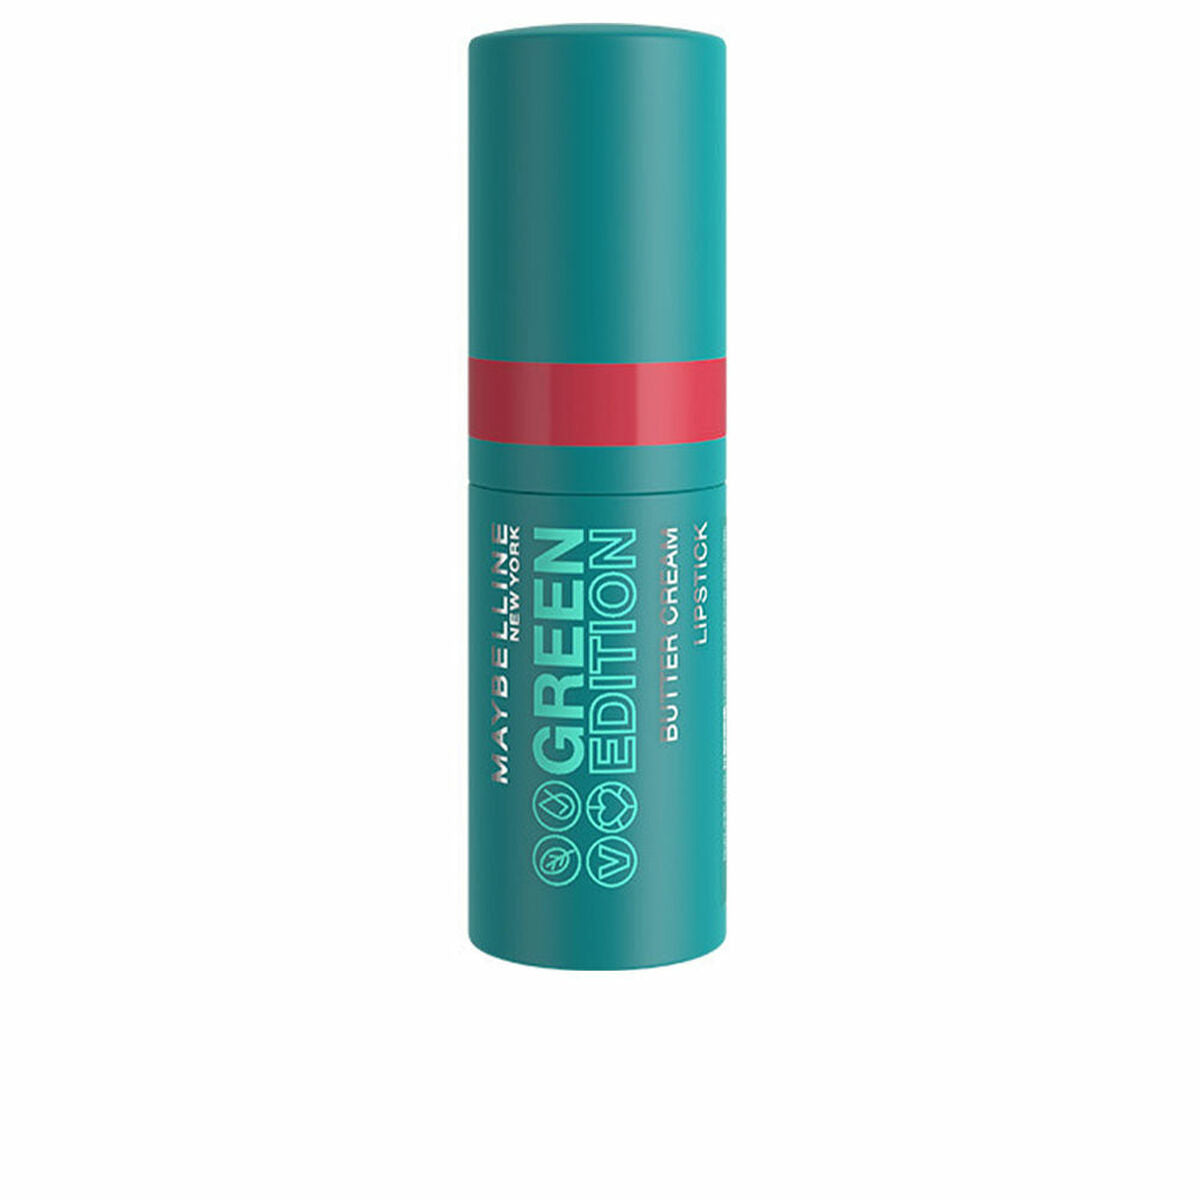 Hidriranje šminka Maybelline Green Edition 008-Floral (10 g)